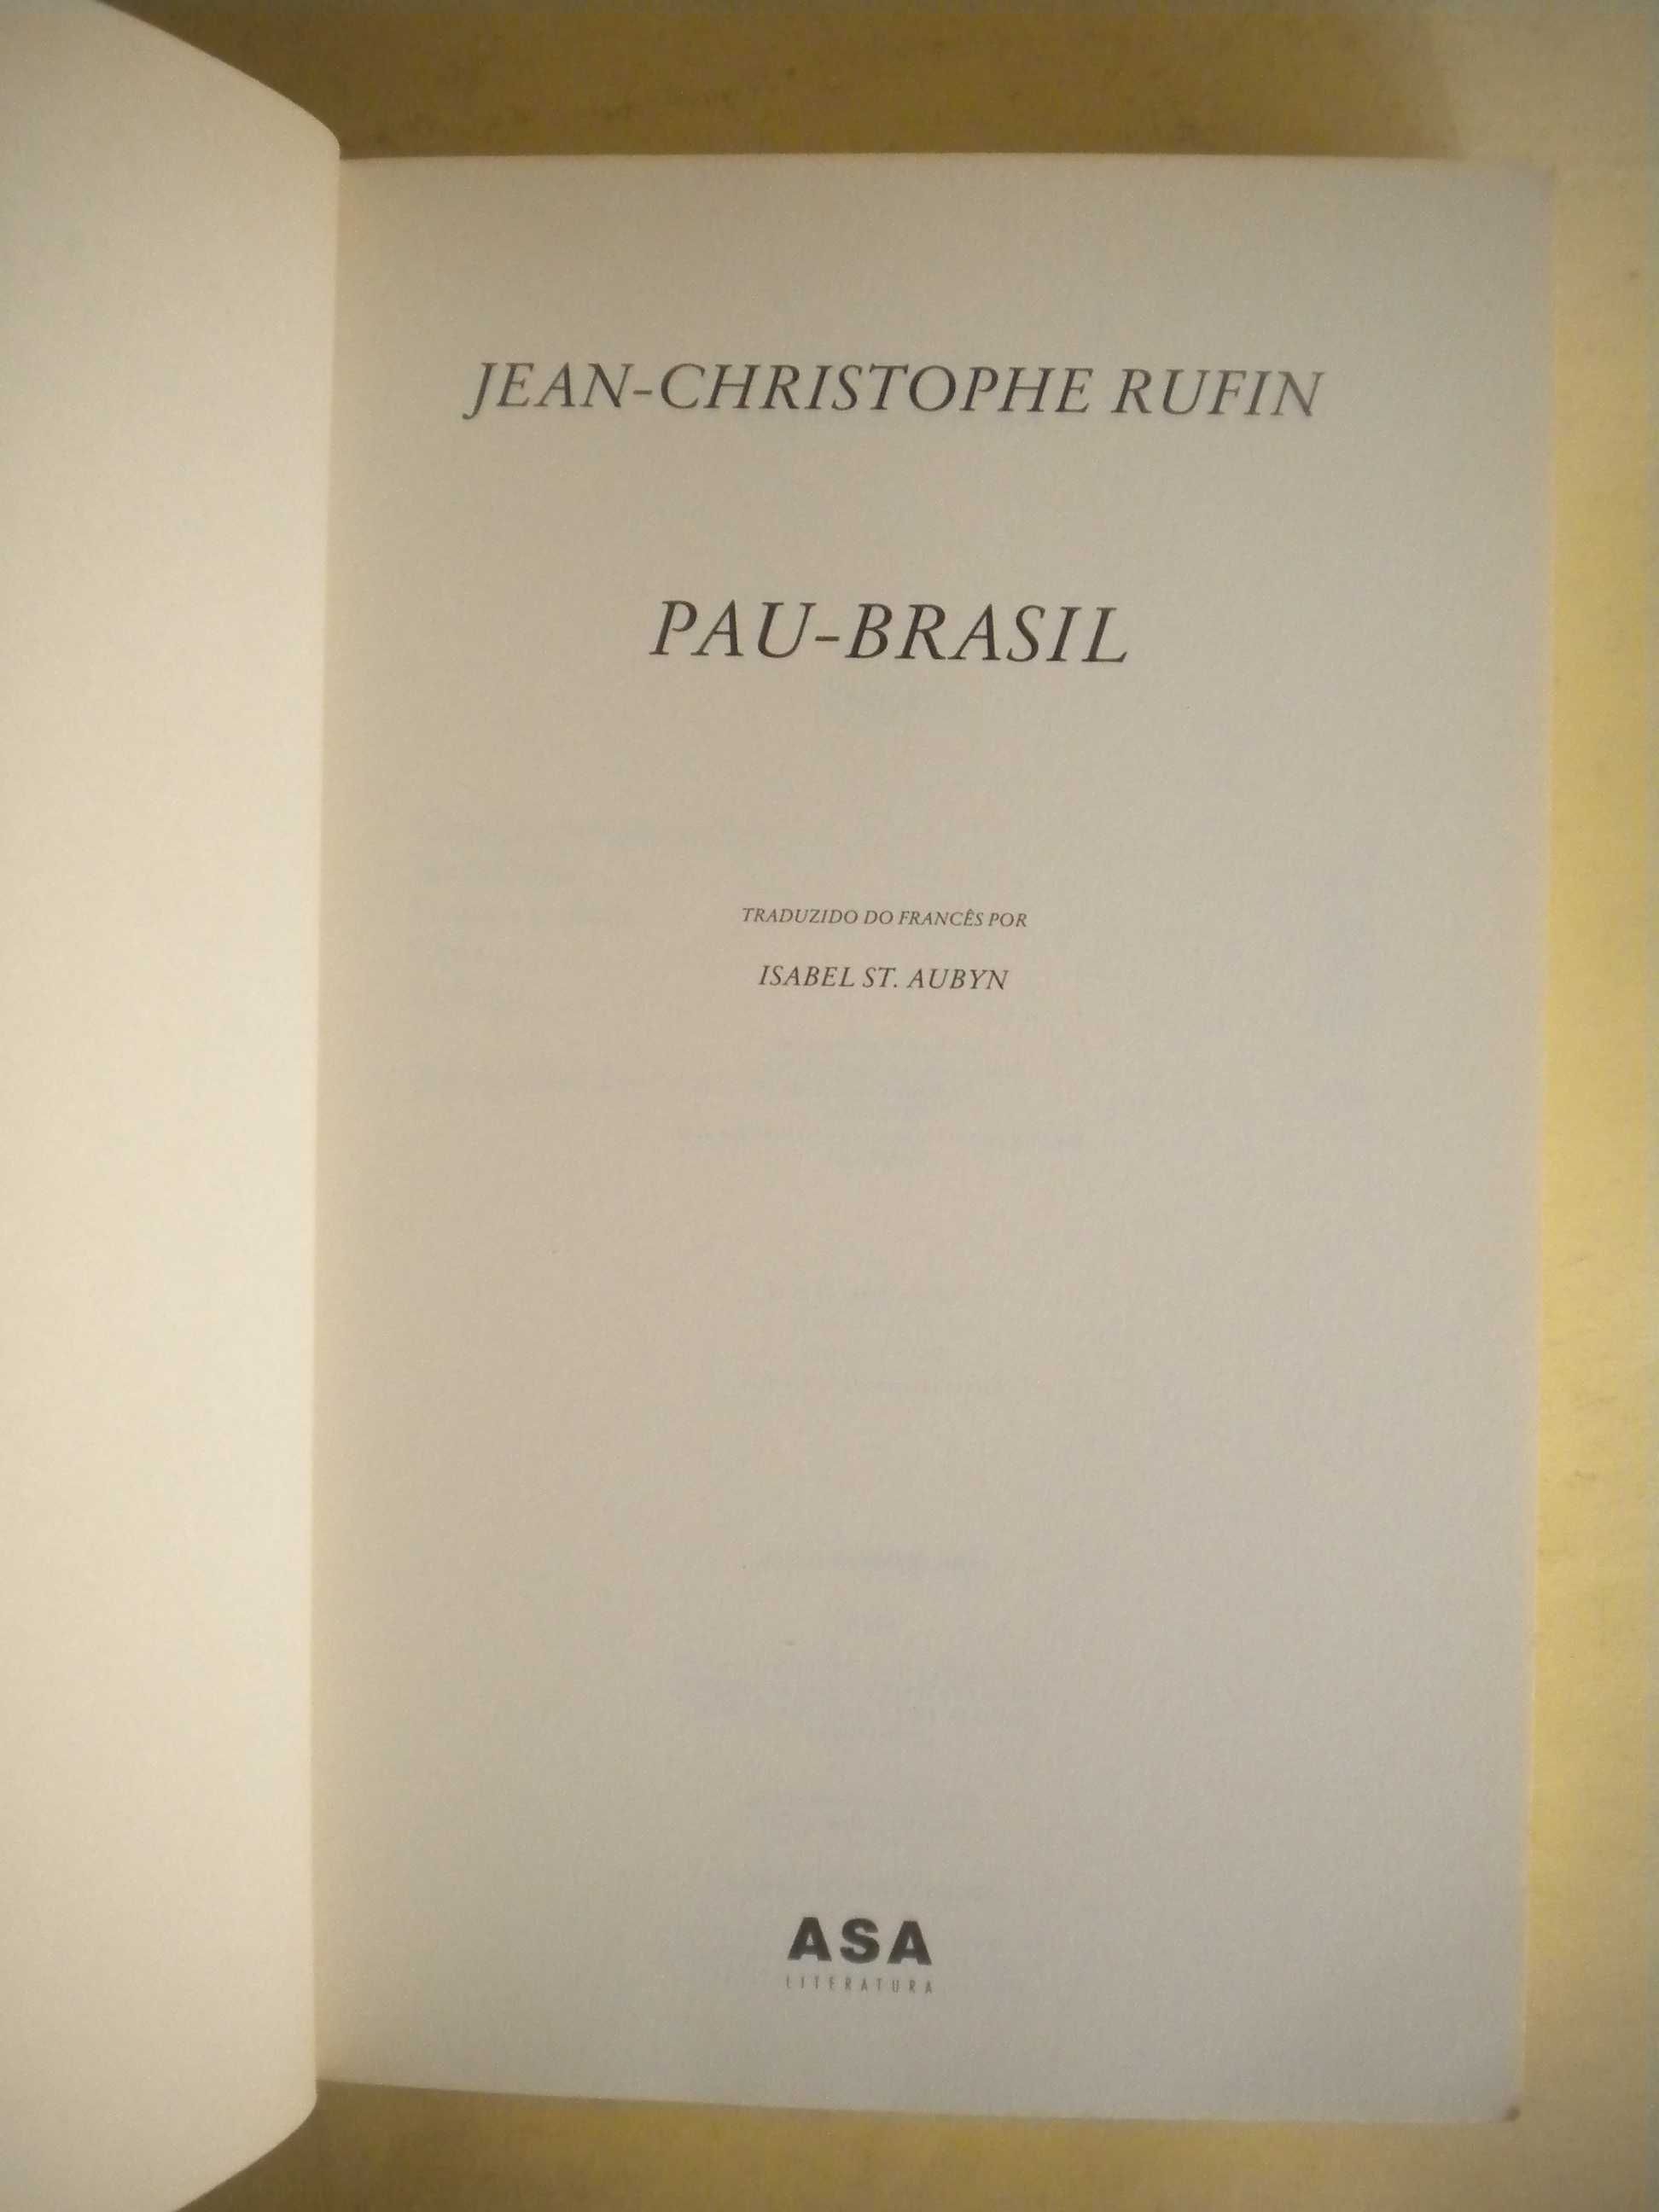 Pau-Brasil
de Jean-Christophe Rufin